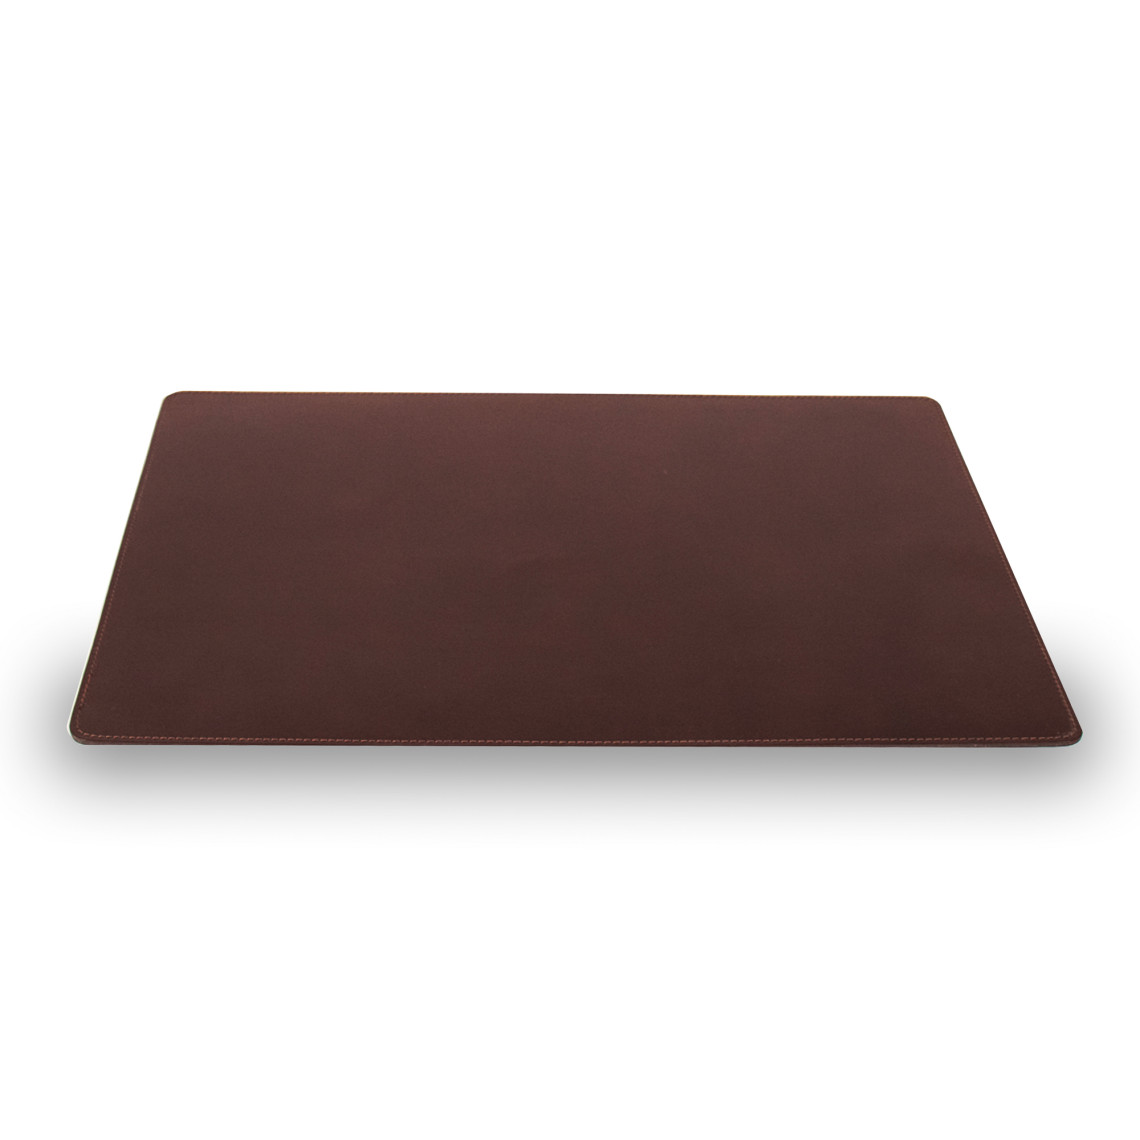 Skrivebordsunderlag i læder, Farve Mörkbrun, Størrelse L60 x B40 cm